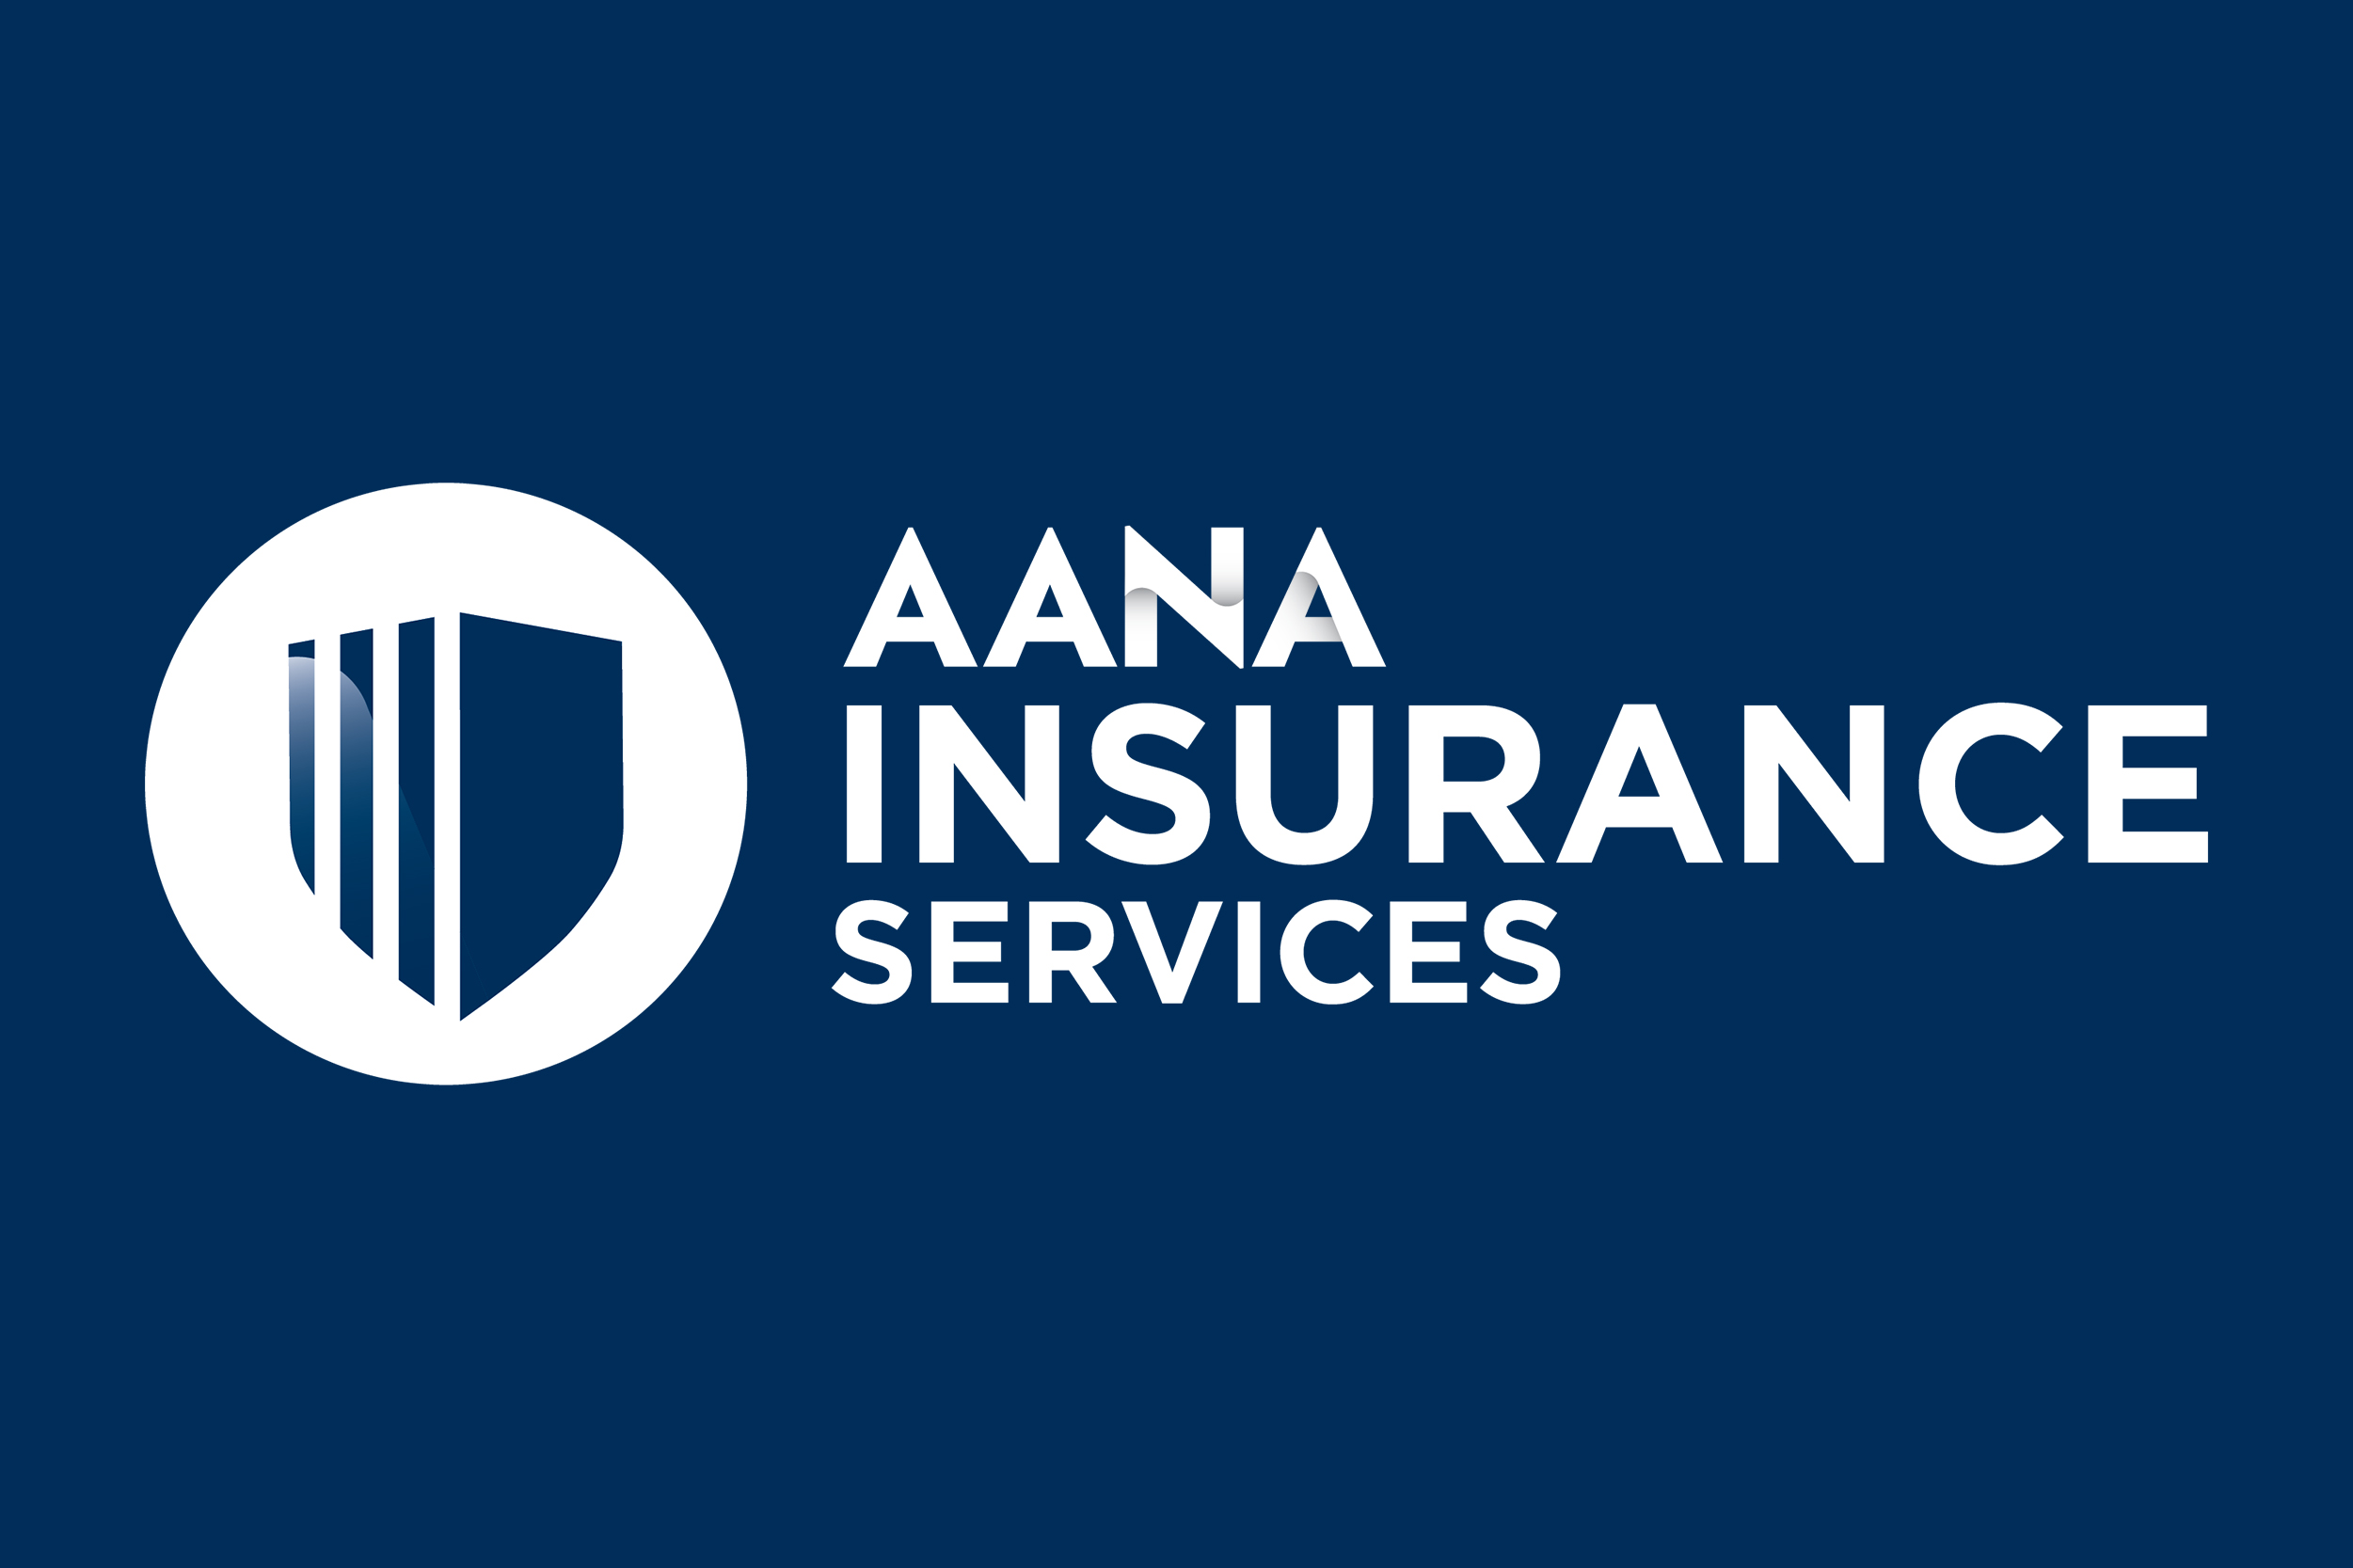 AANA Insurance